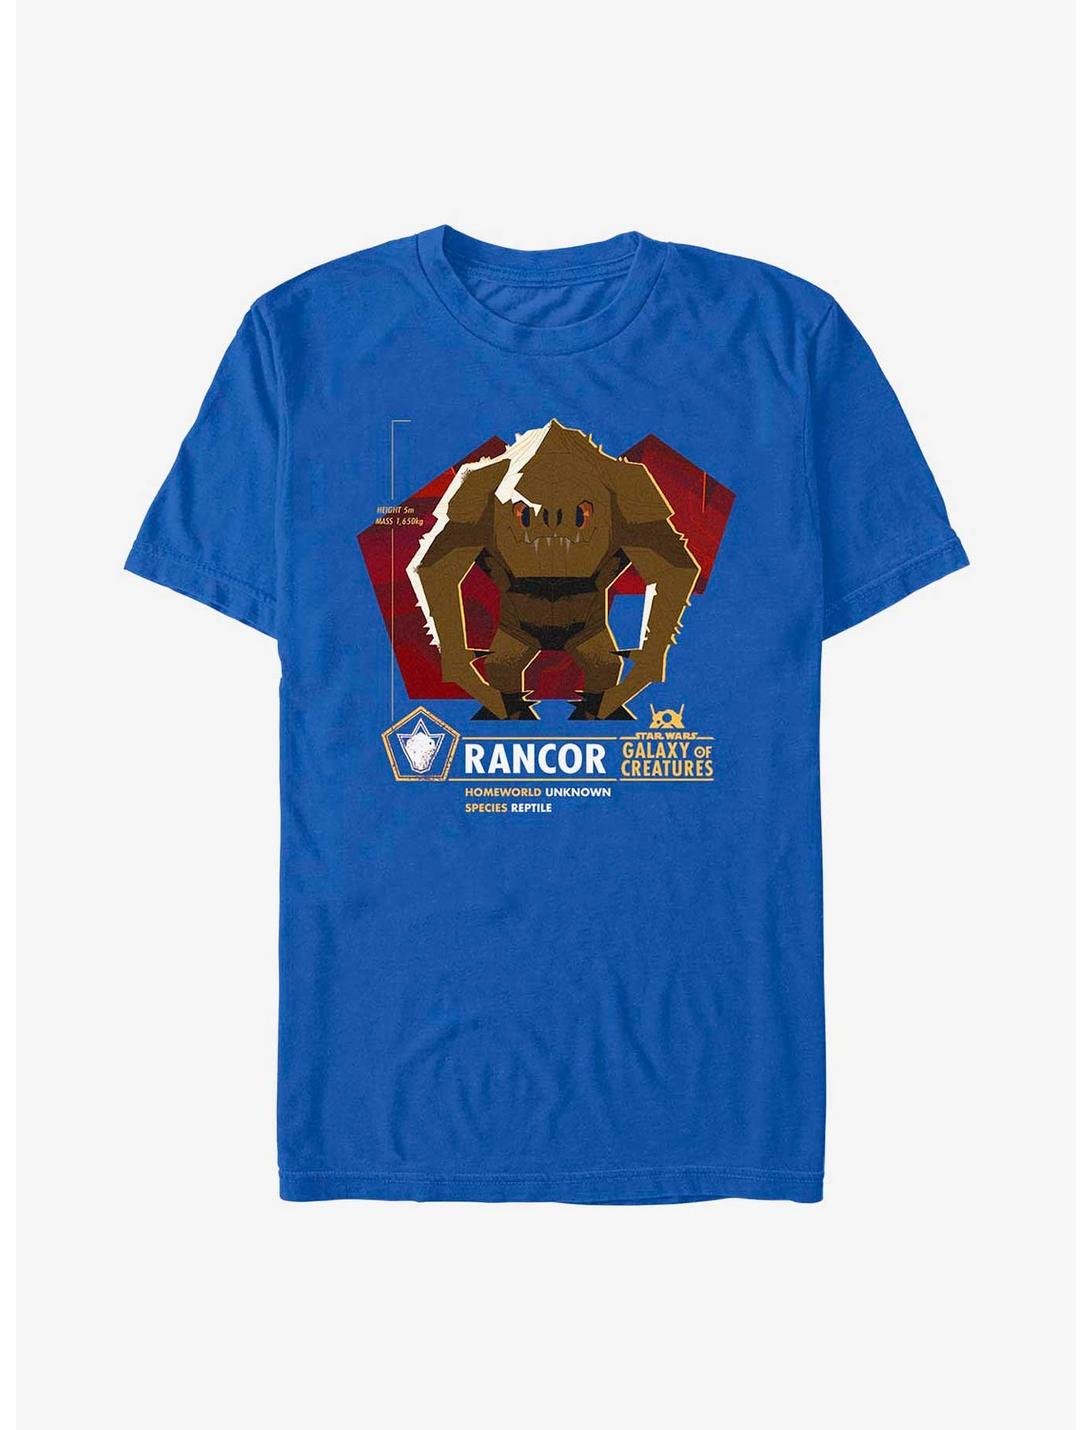 Star Wars Galaxy Of Creatures Rancor Species T-Shirt, ROYAL, hi-res